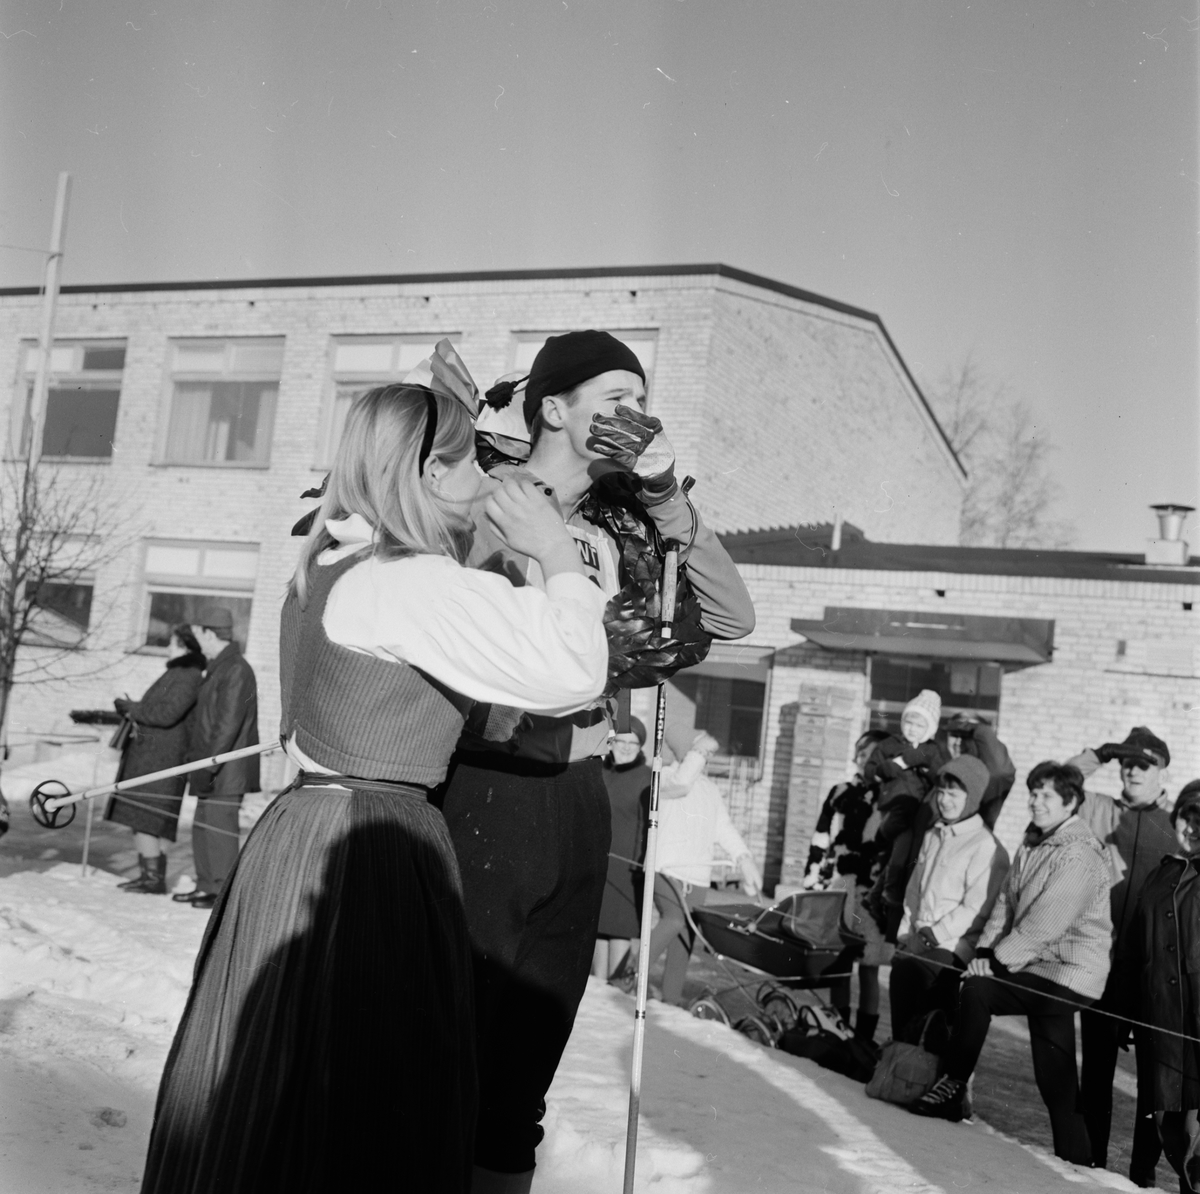 Distansloppet i skidor, sannolikt Tierps socken, Uppland februari 1969